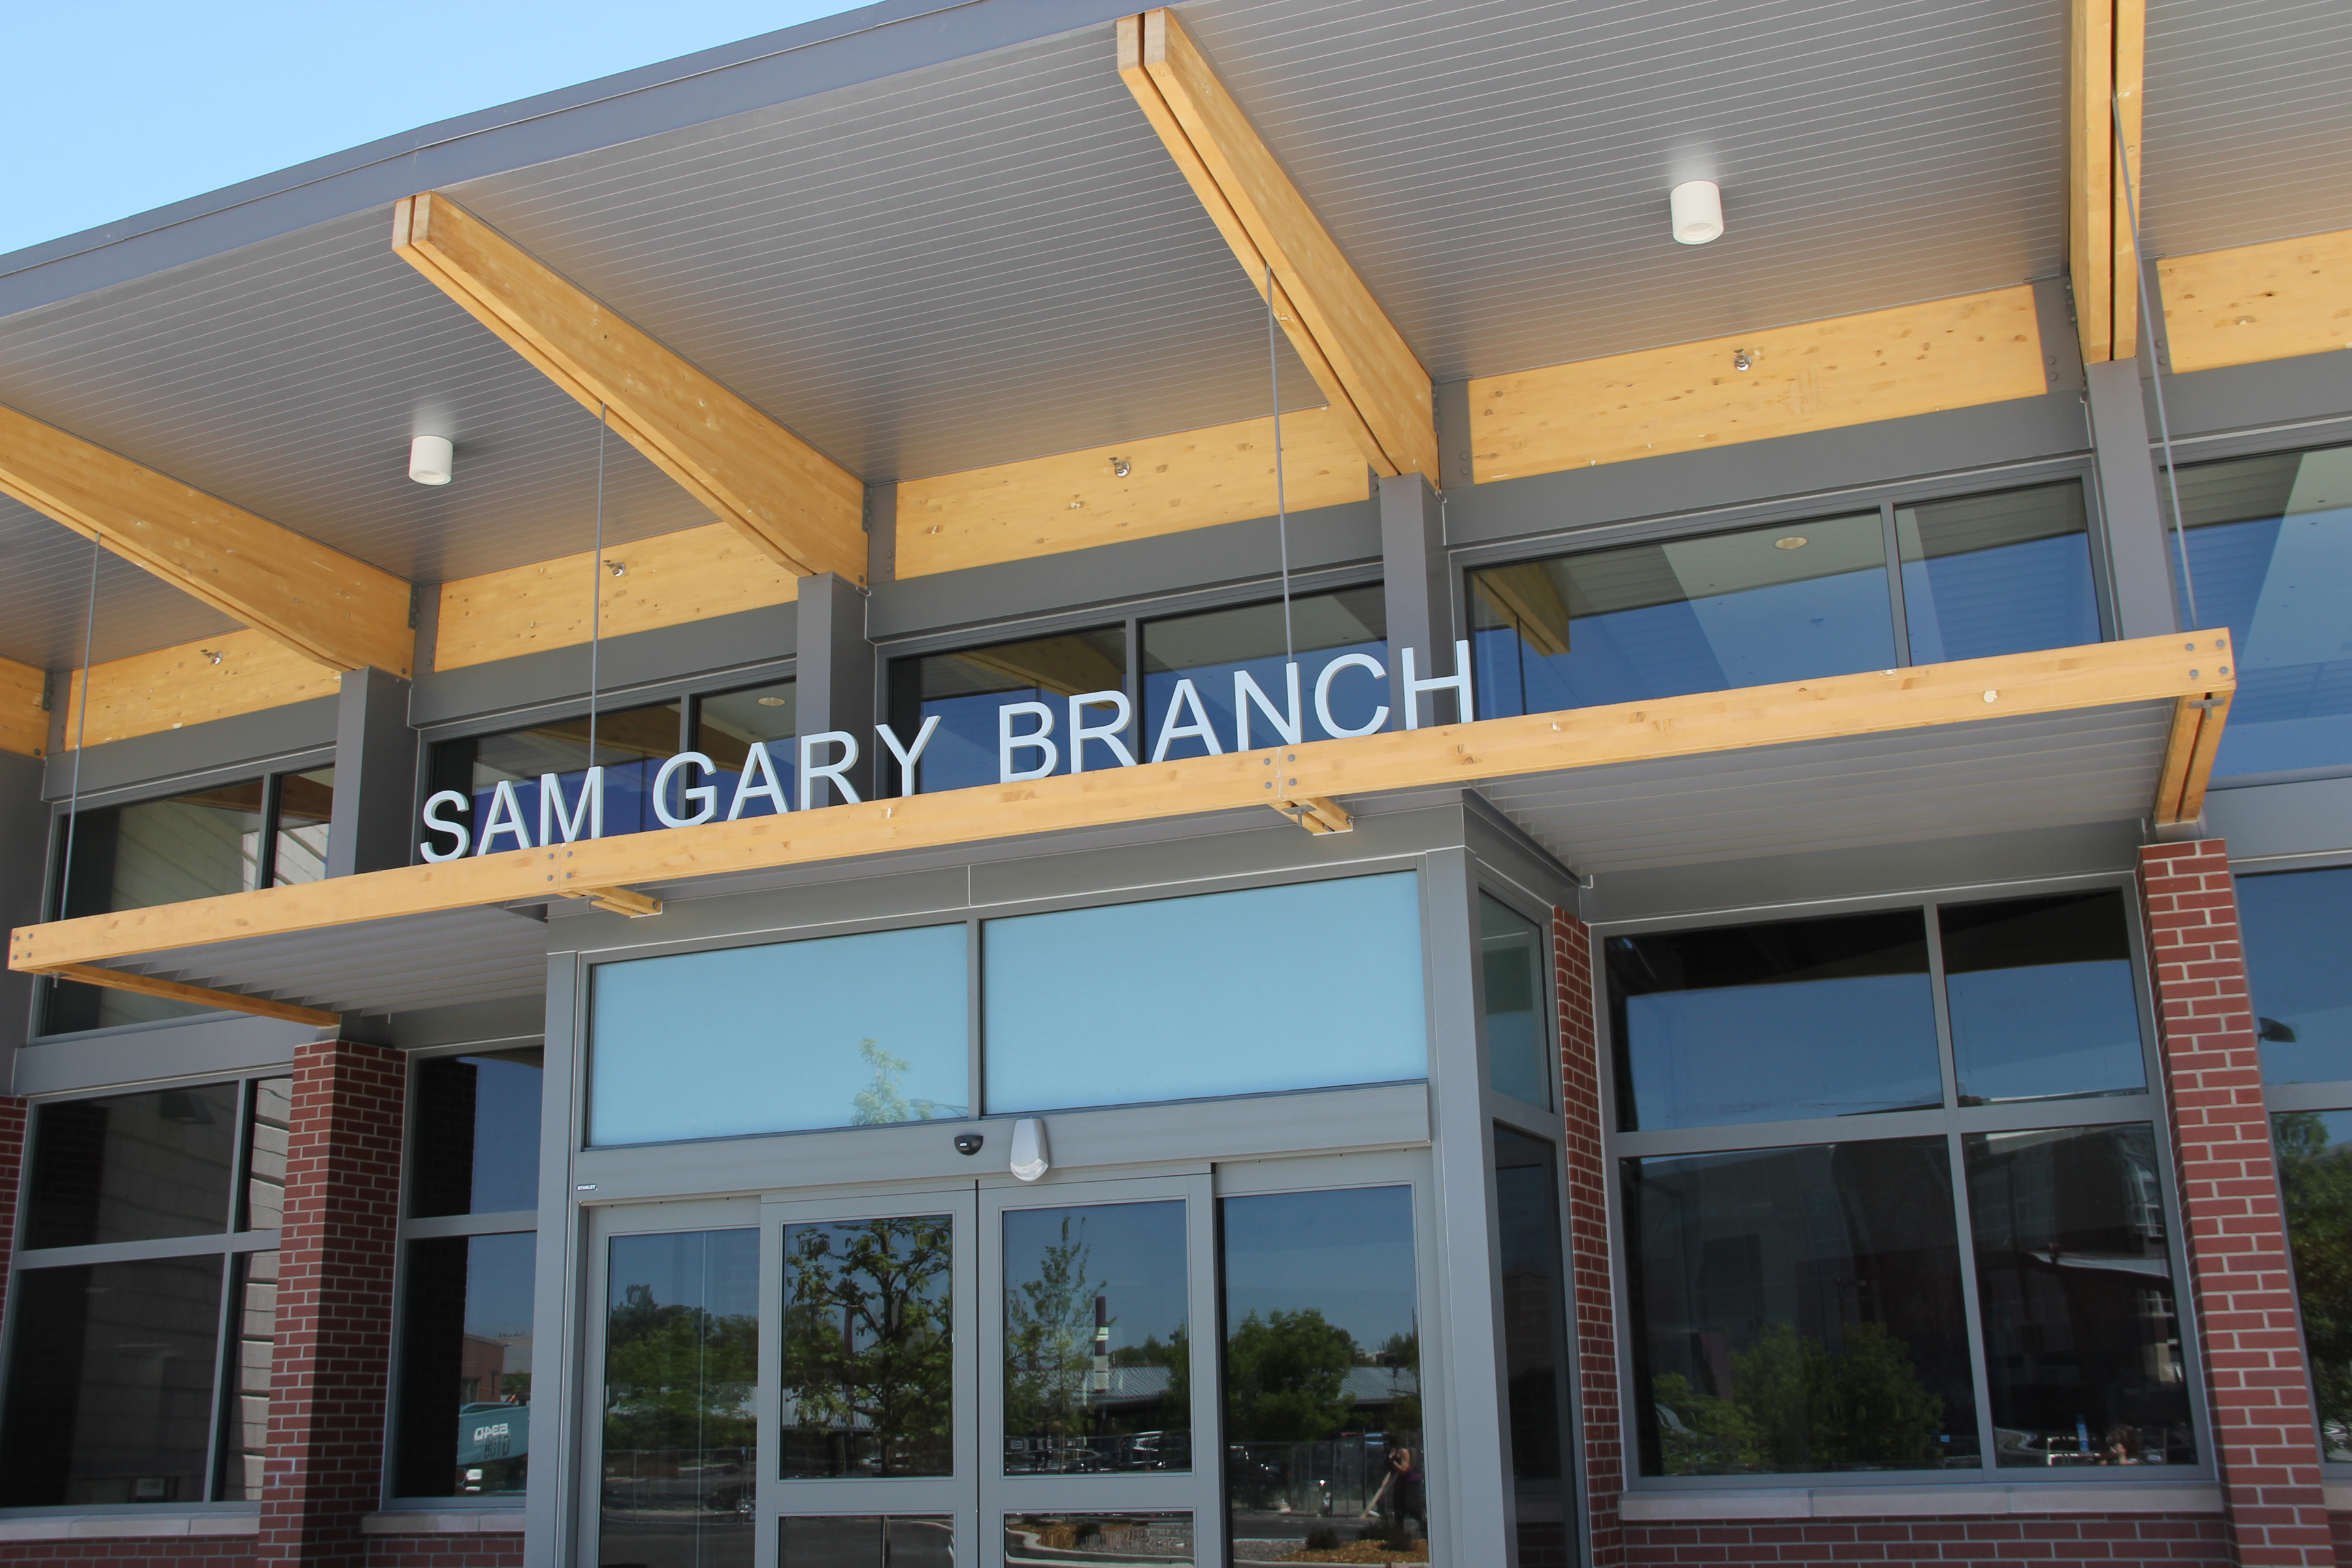 Denver Public Library - Sam Gary branch exterior